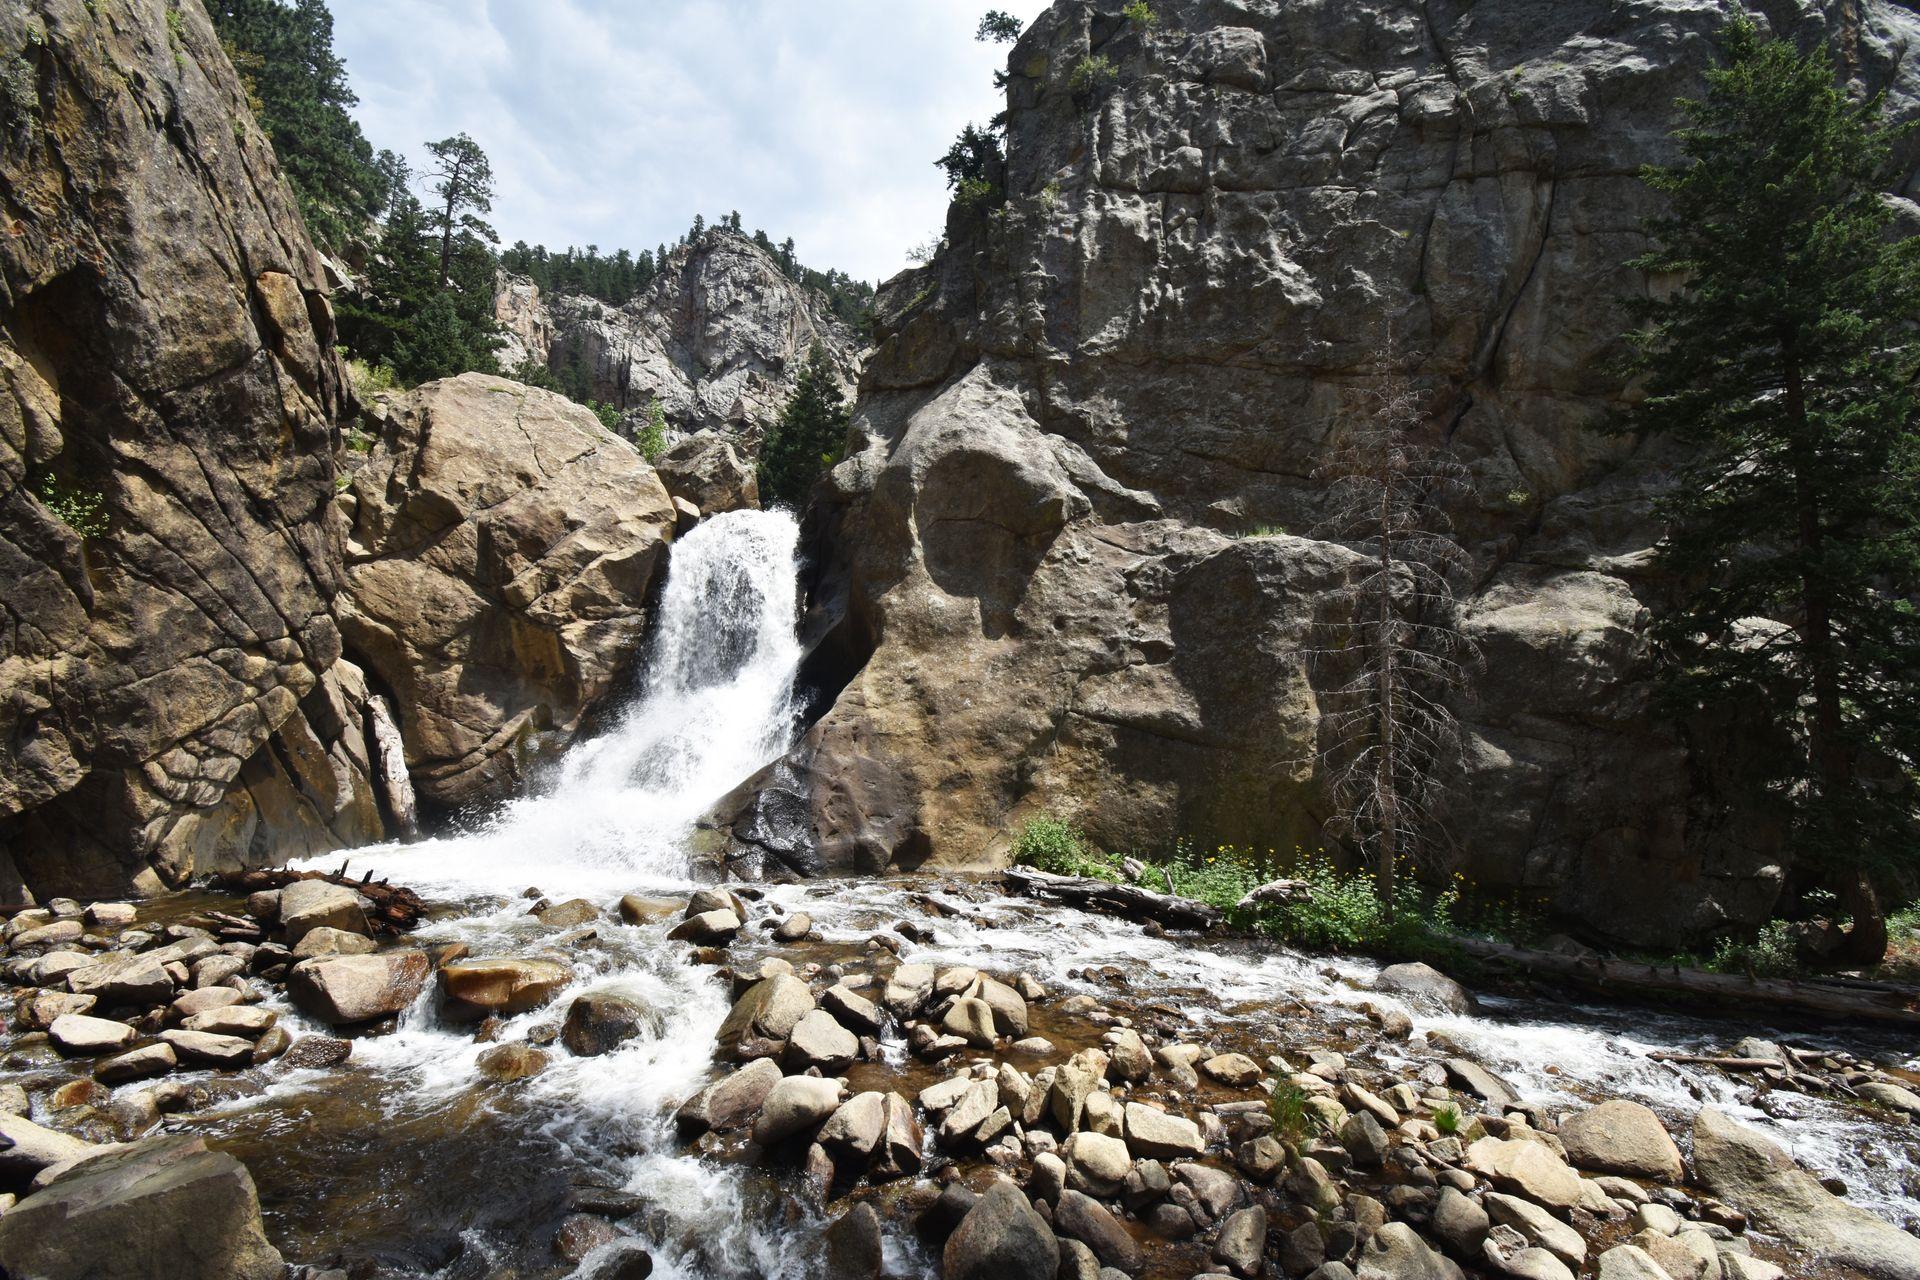 A waterfall surrounding by rocks.